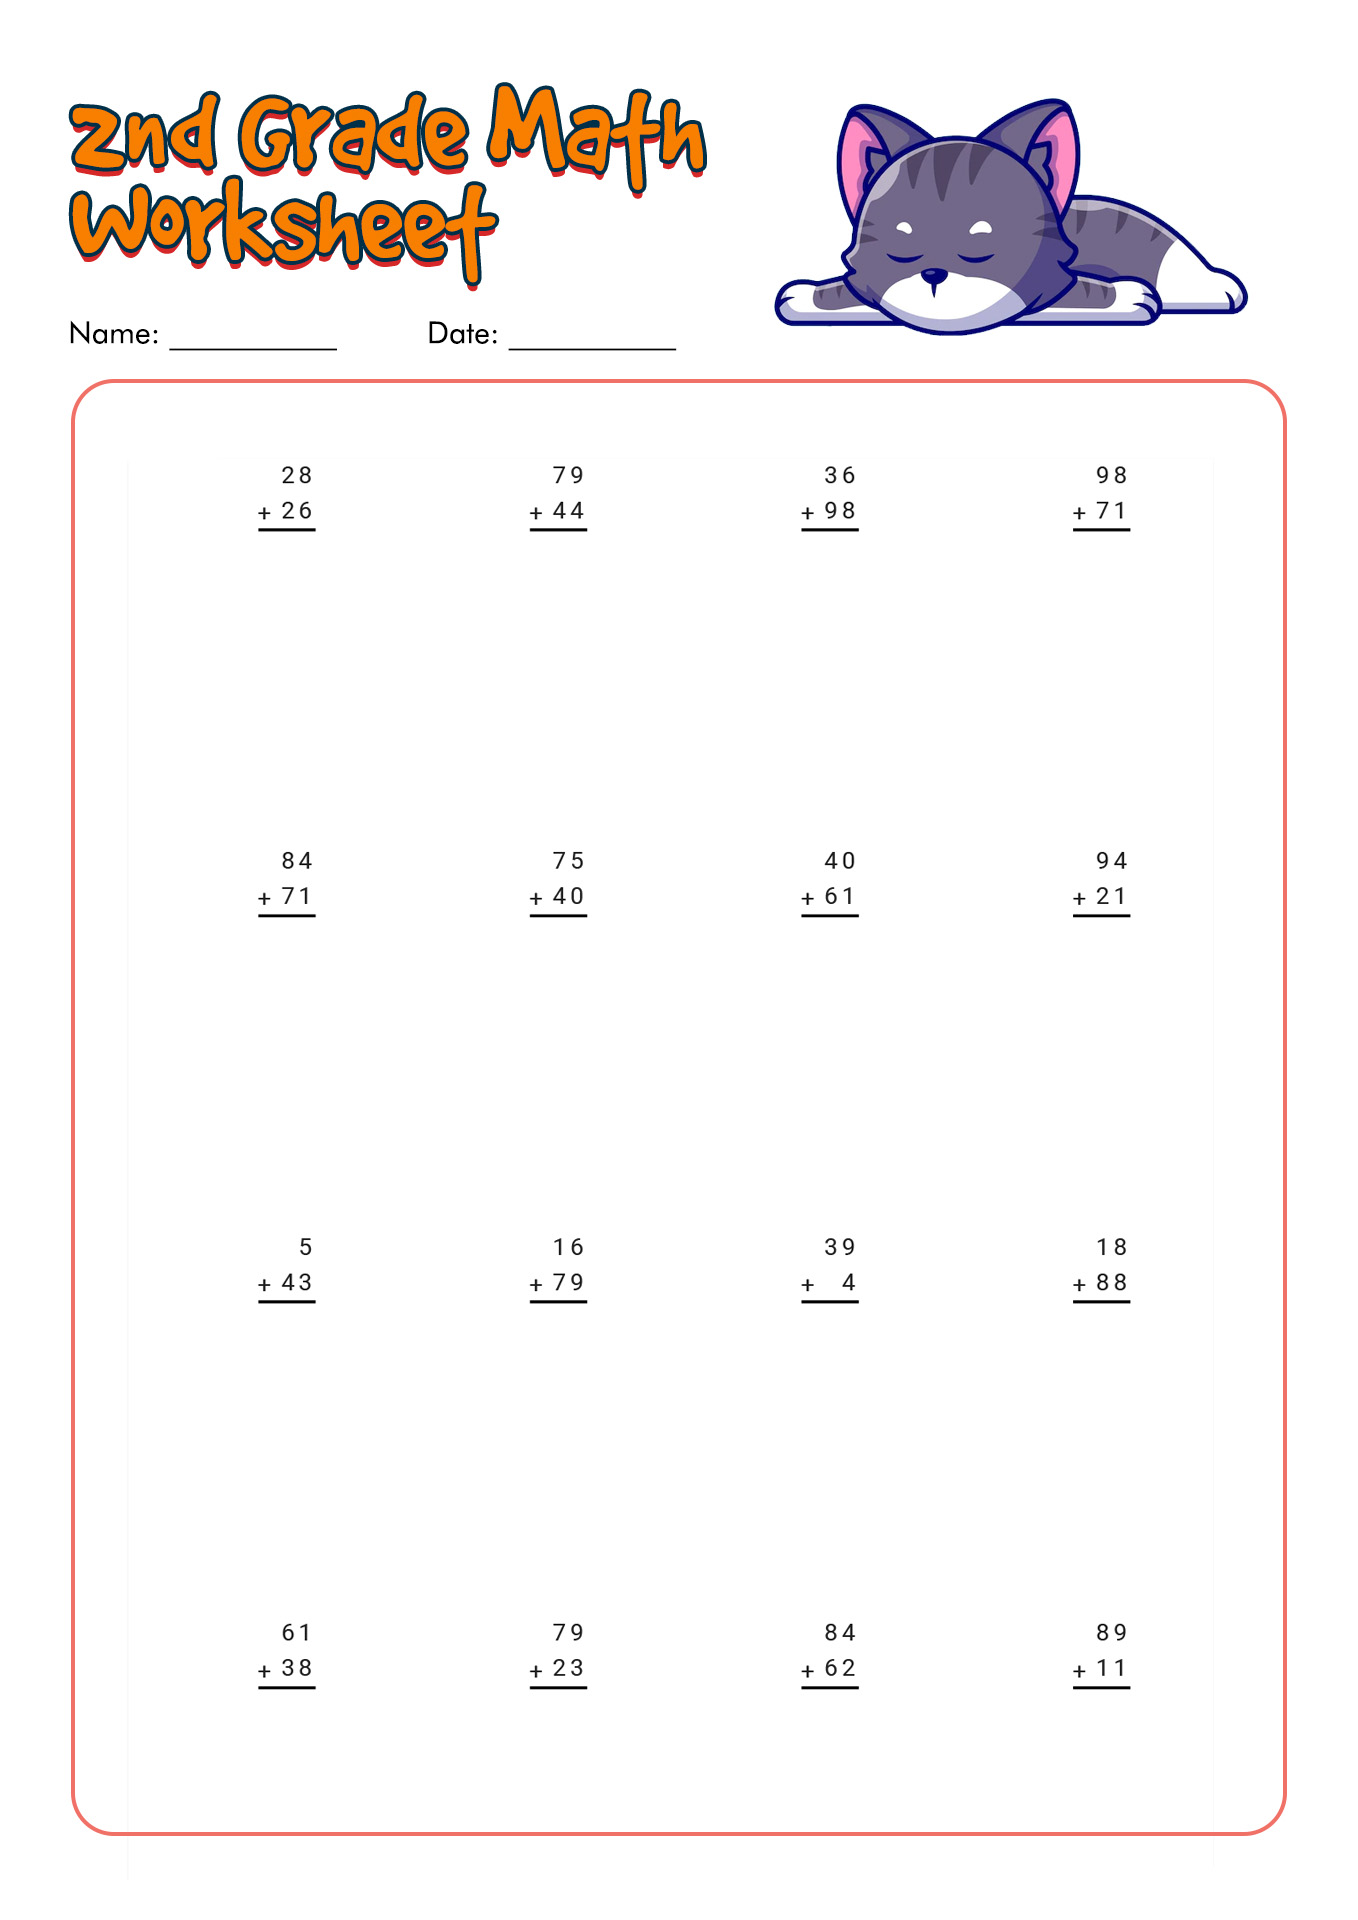 2nd Grade Math Worksheets Printable Image